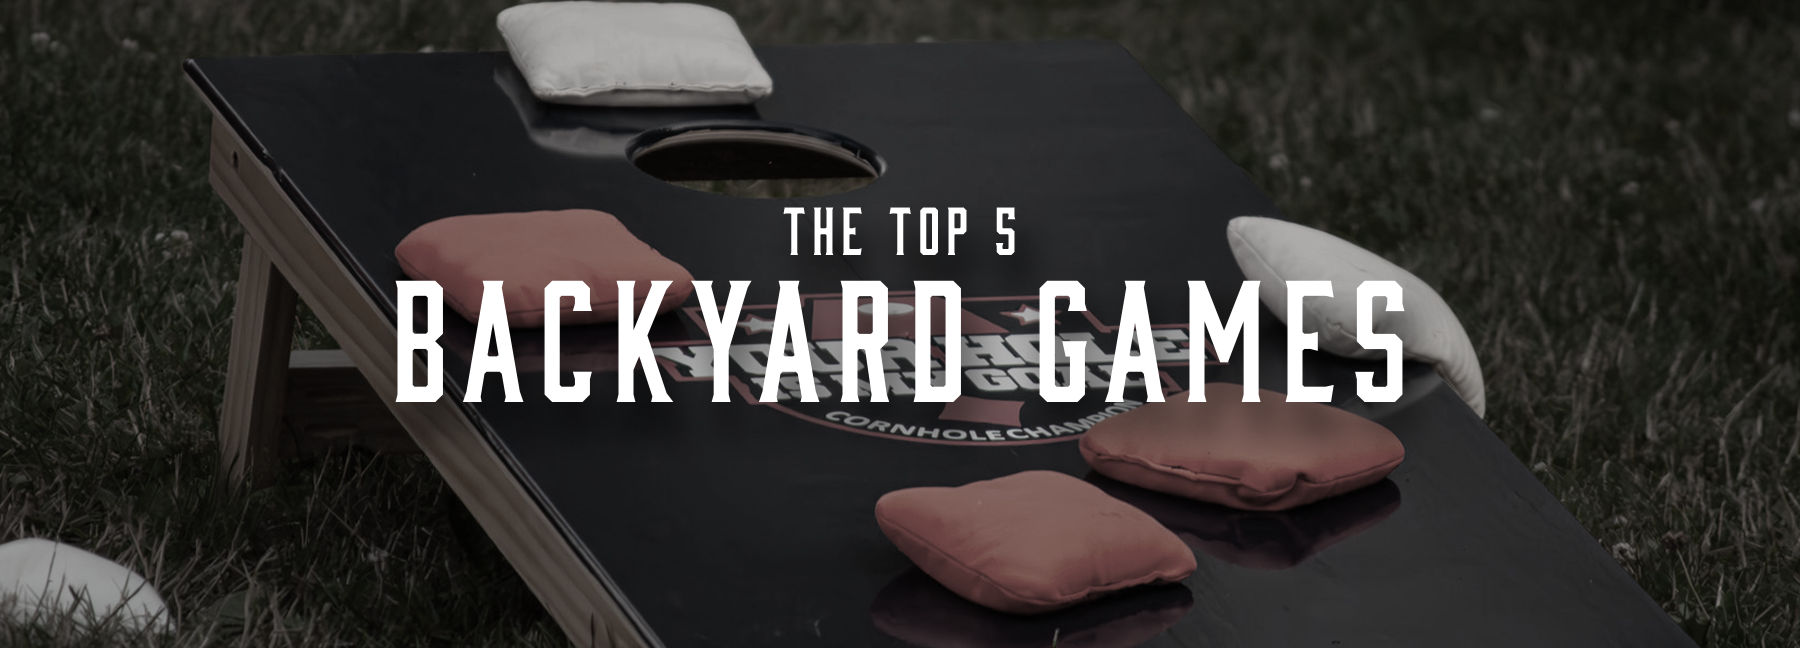 The Top 5 Backyard Games